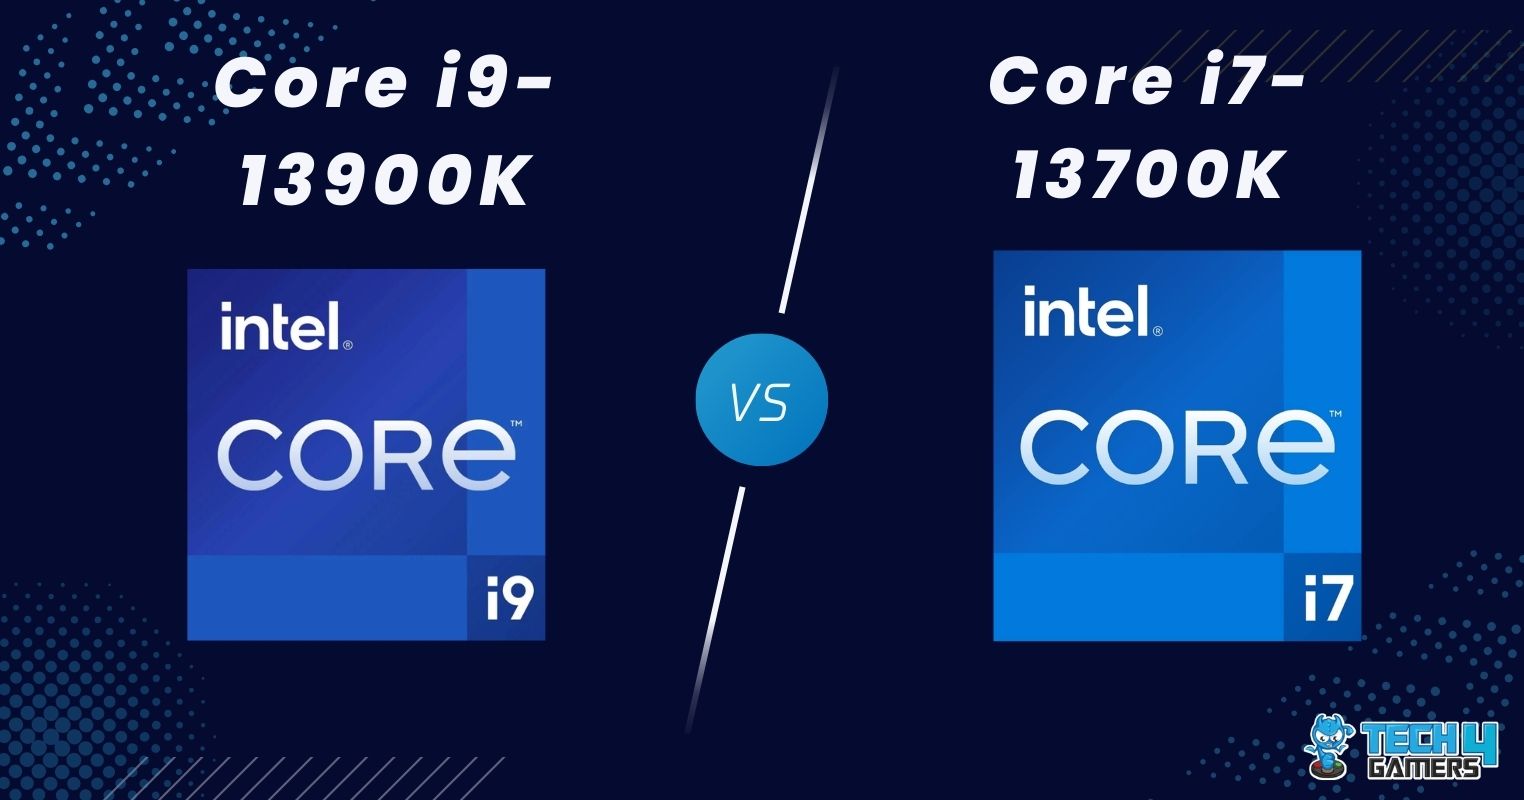 TechWafer on LinkedIn: Intel Core i9 13900K vs. Core i7 13700K